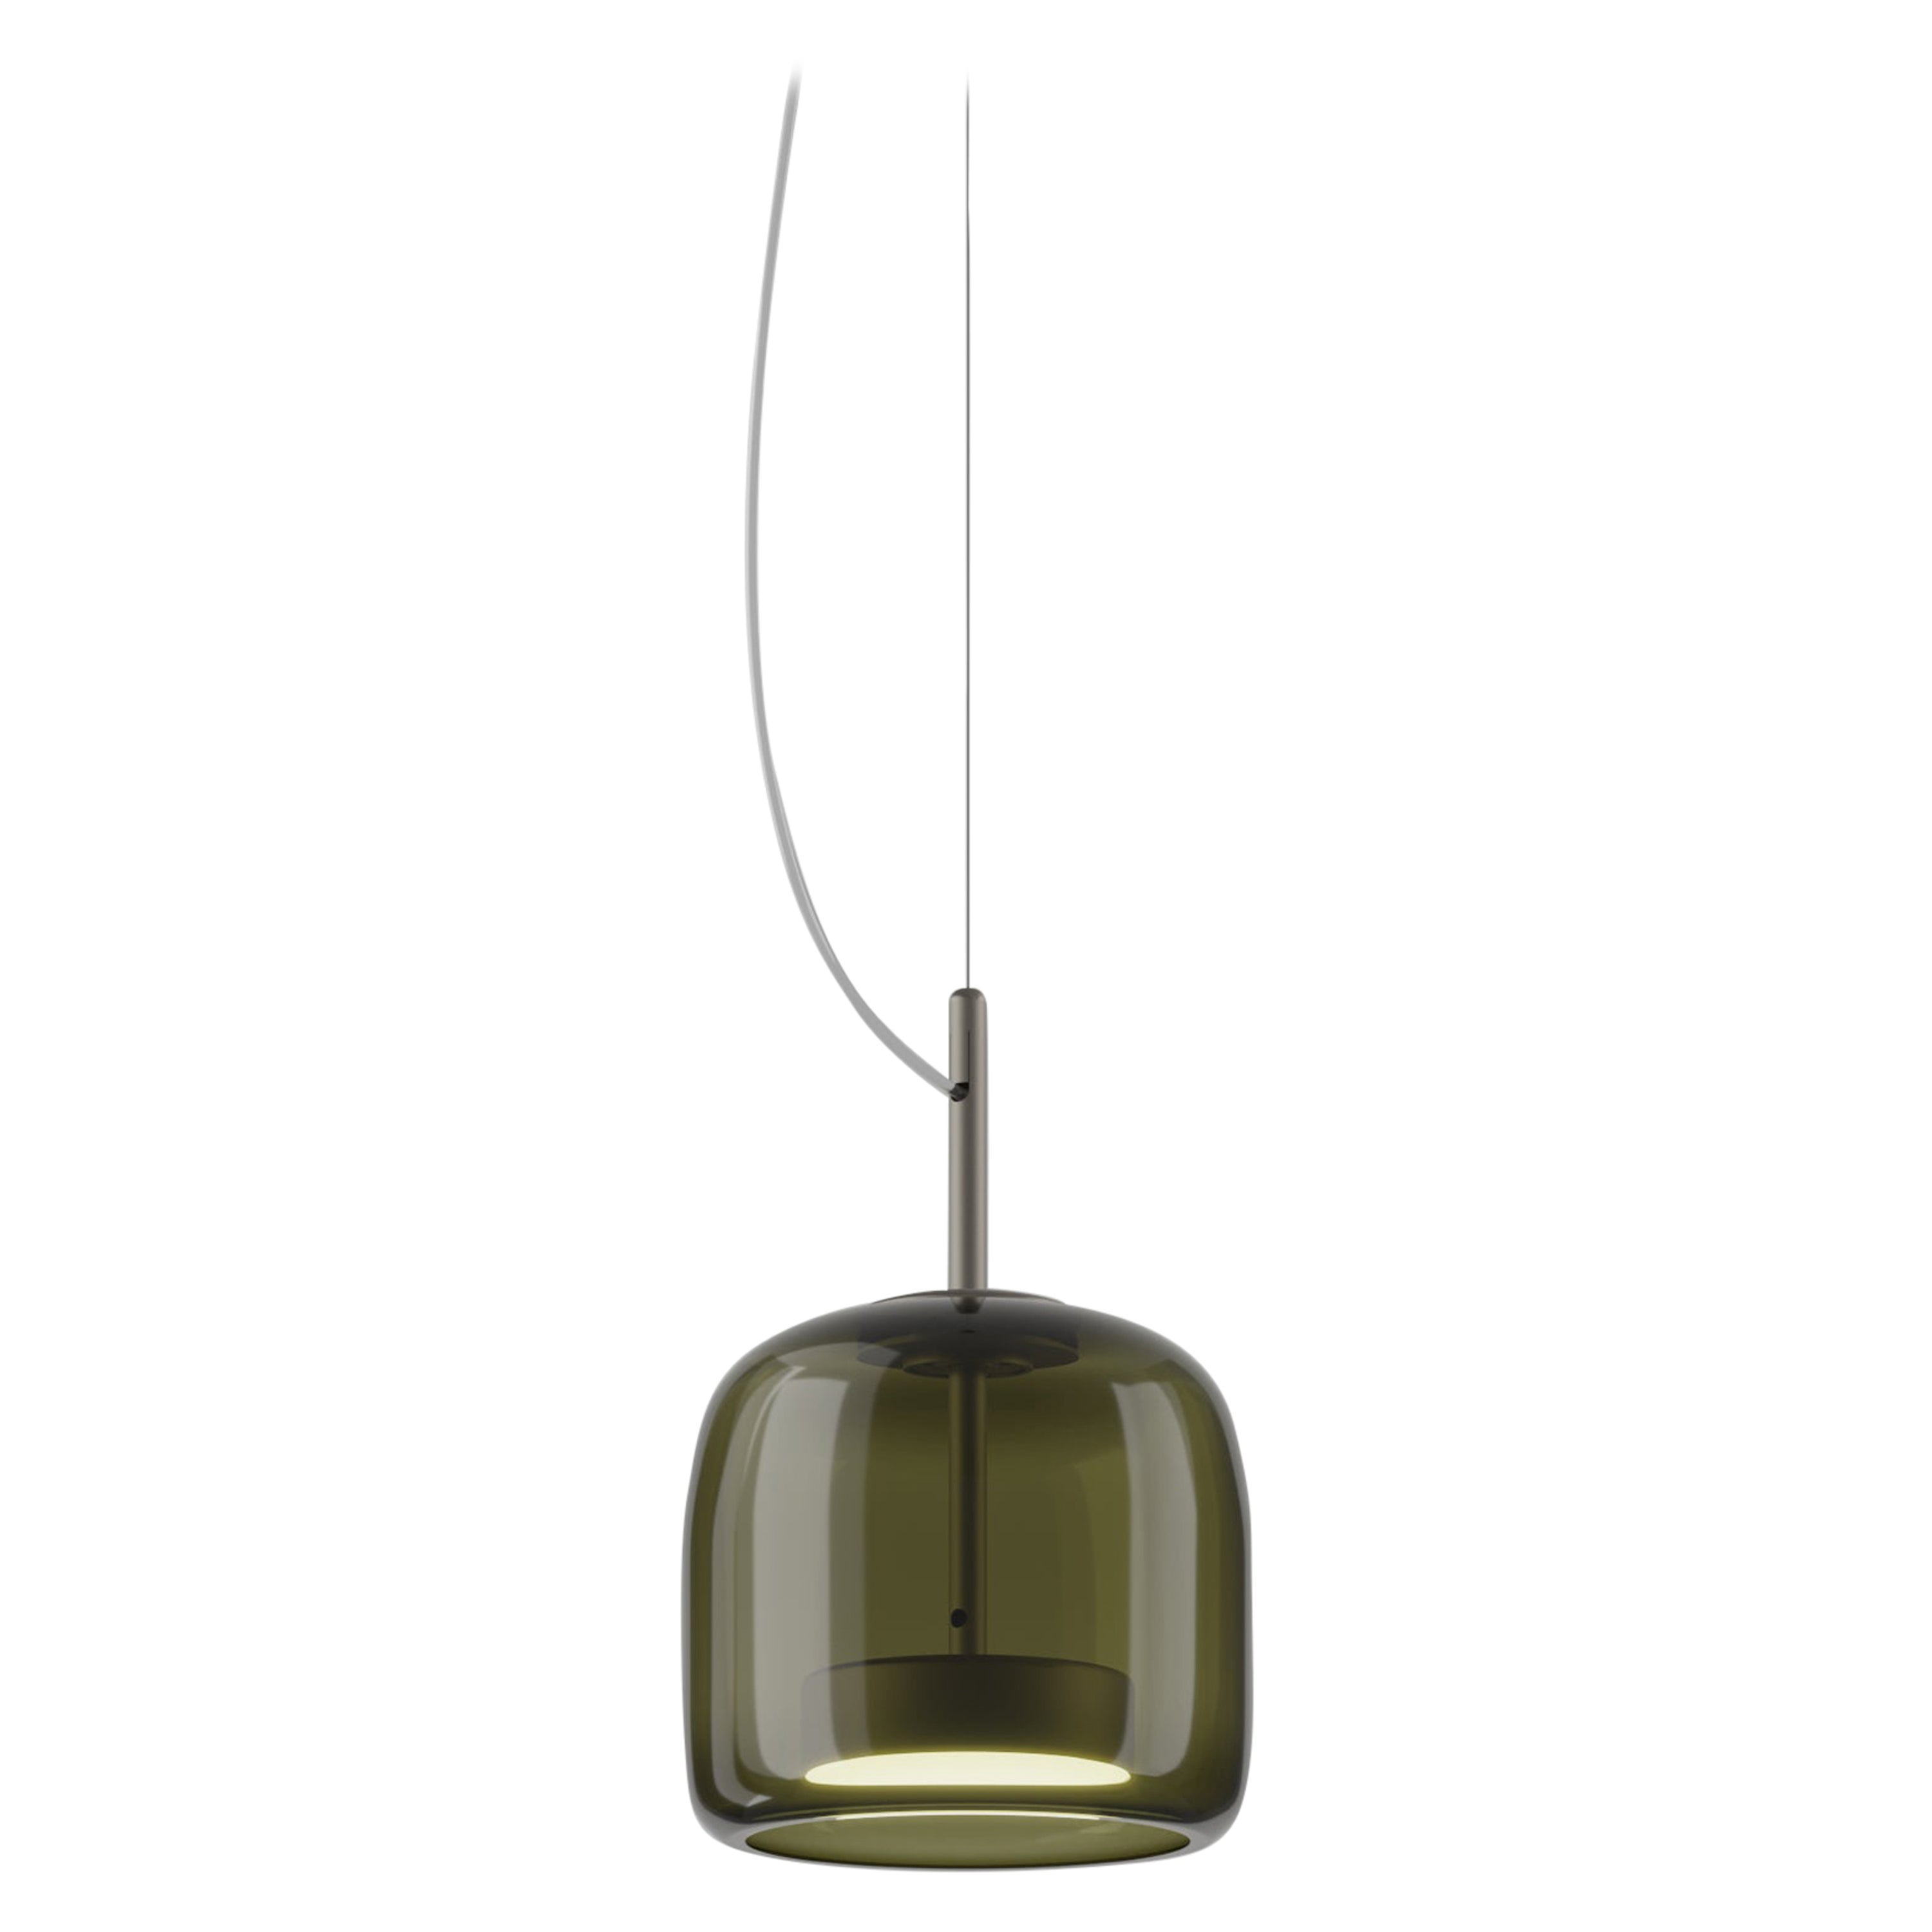 Vistosi Pendant Light in Old Green Transparent Glass And Matt Steel Finish For Sale